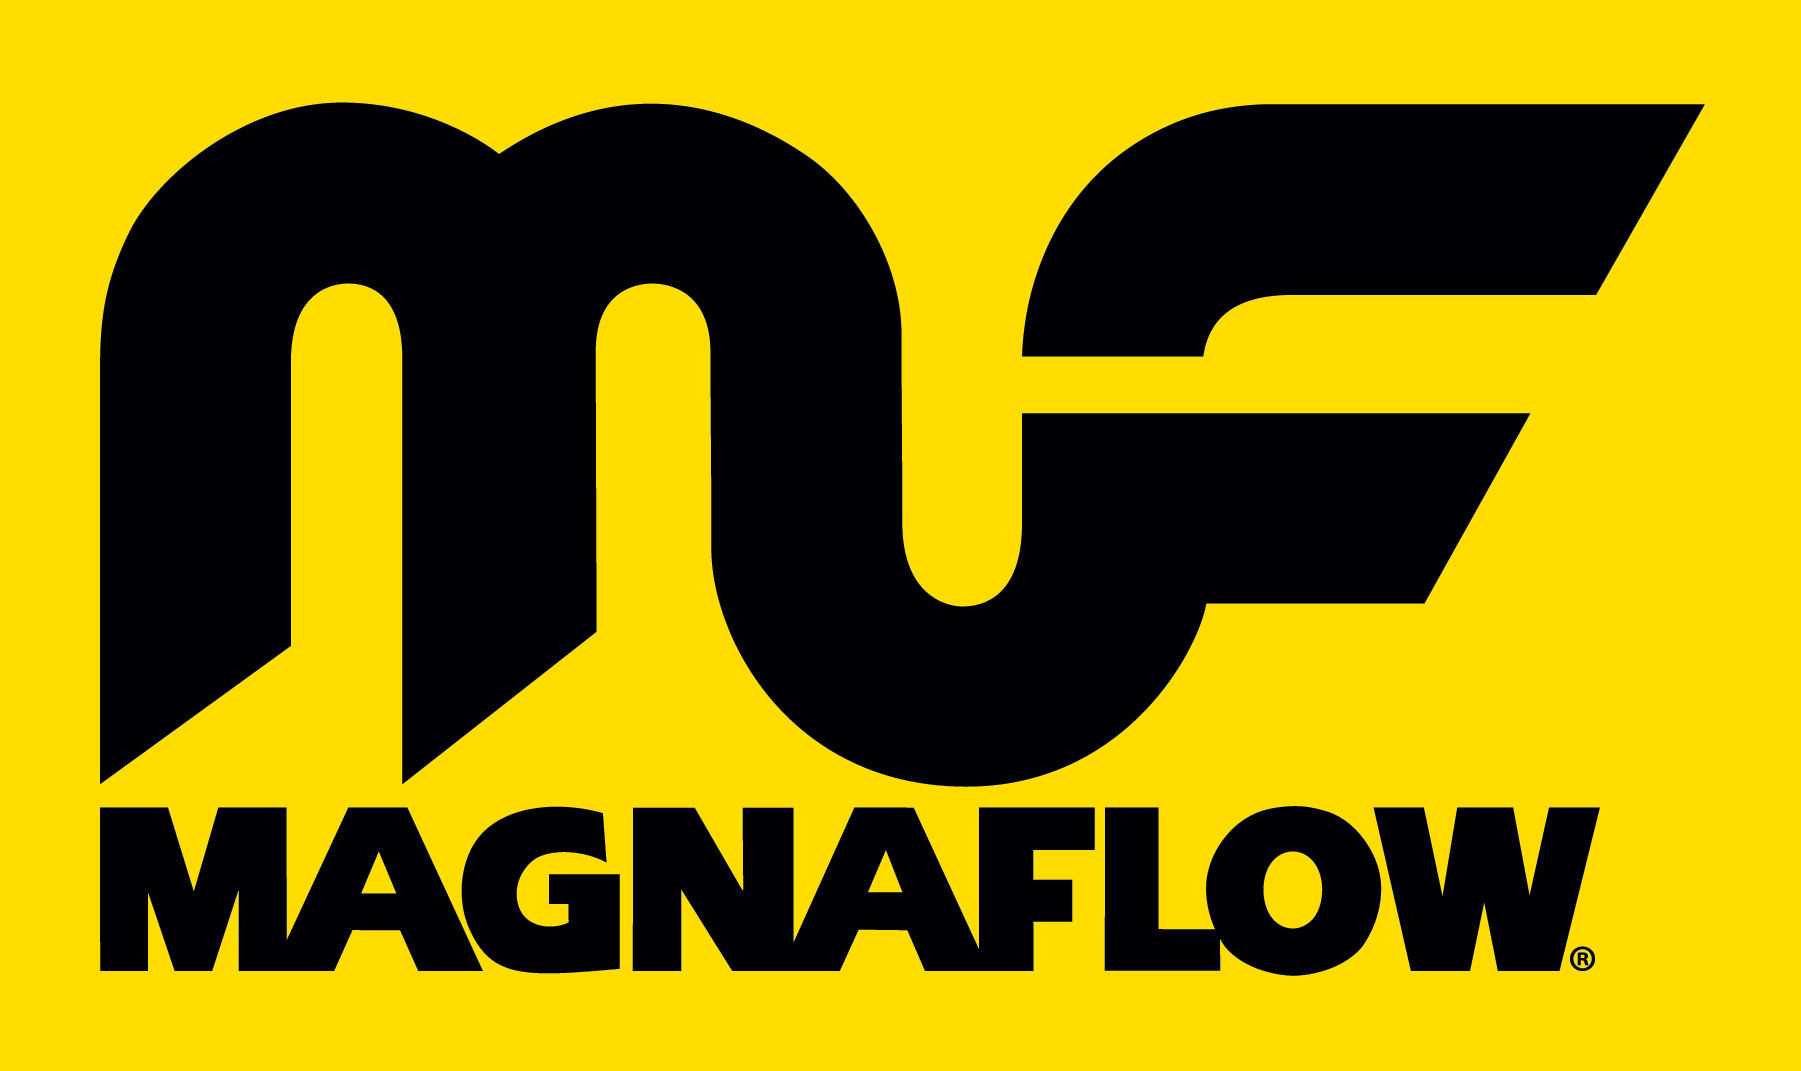 mf_magnaflow_lg_5f1b9144-fae4-4537-a7aa-7b5f43d2f408.png